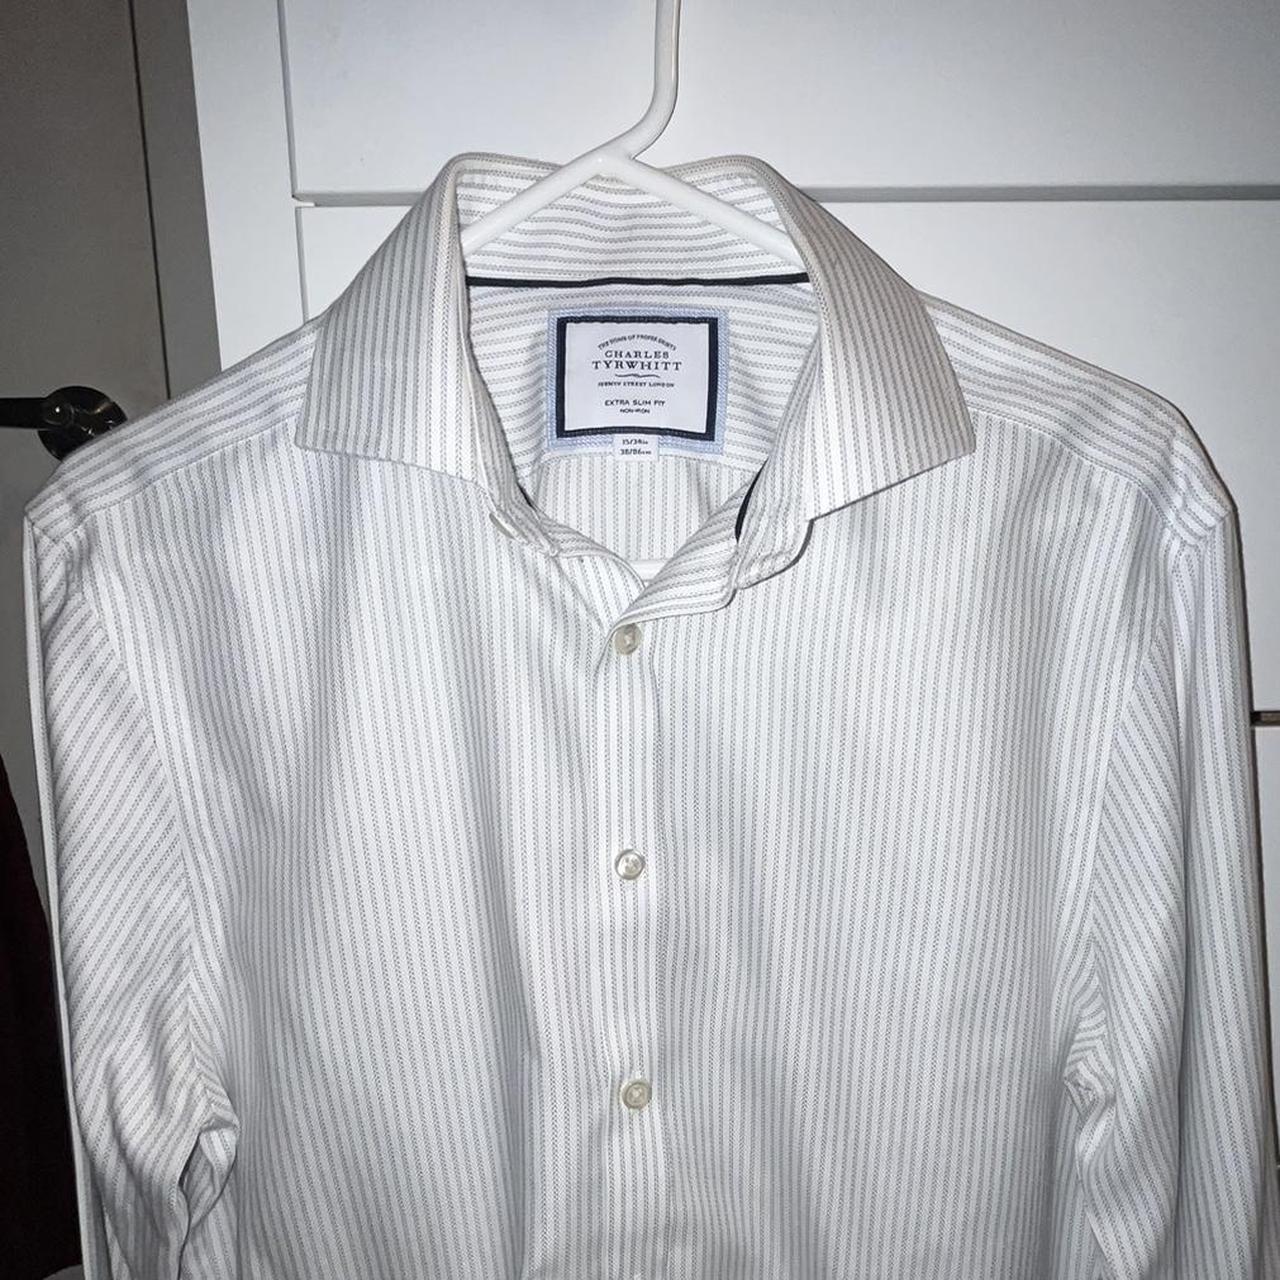 Charles Tyrwhitt Men's Grey and White Shirt (2)